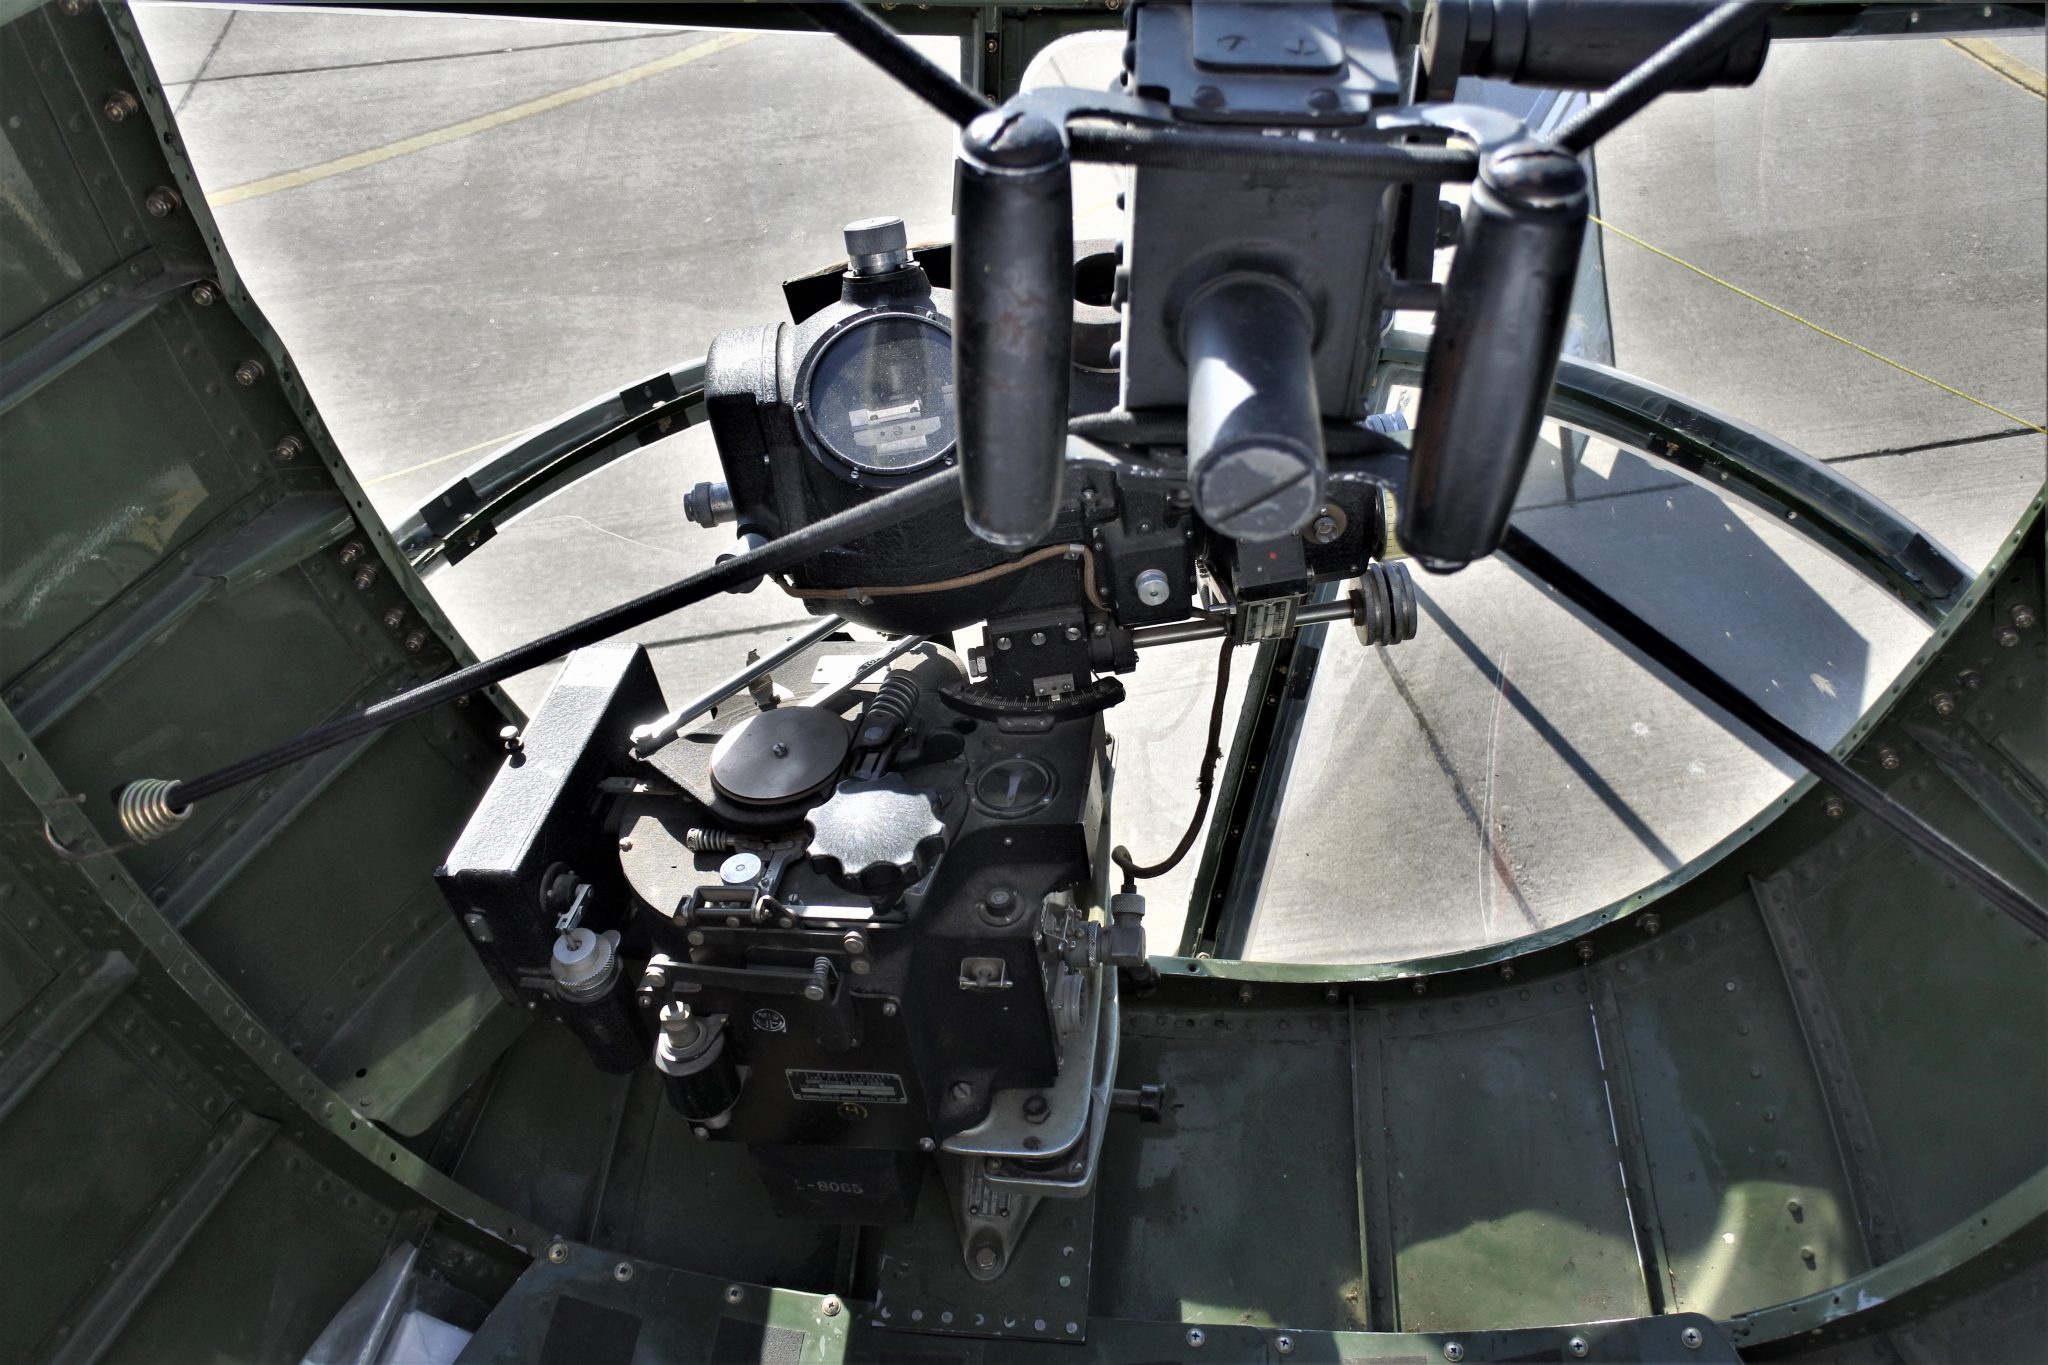 Norden bombsight